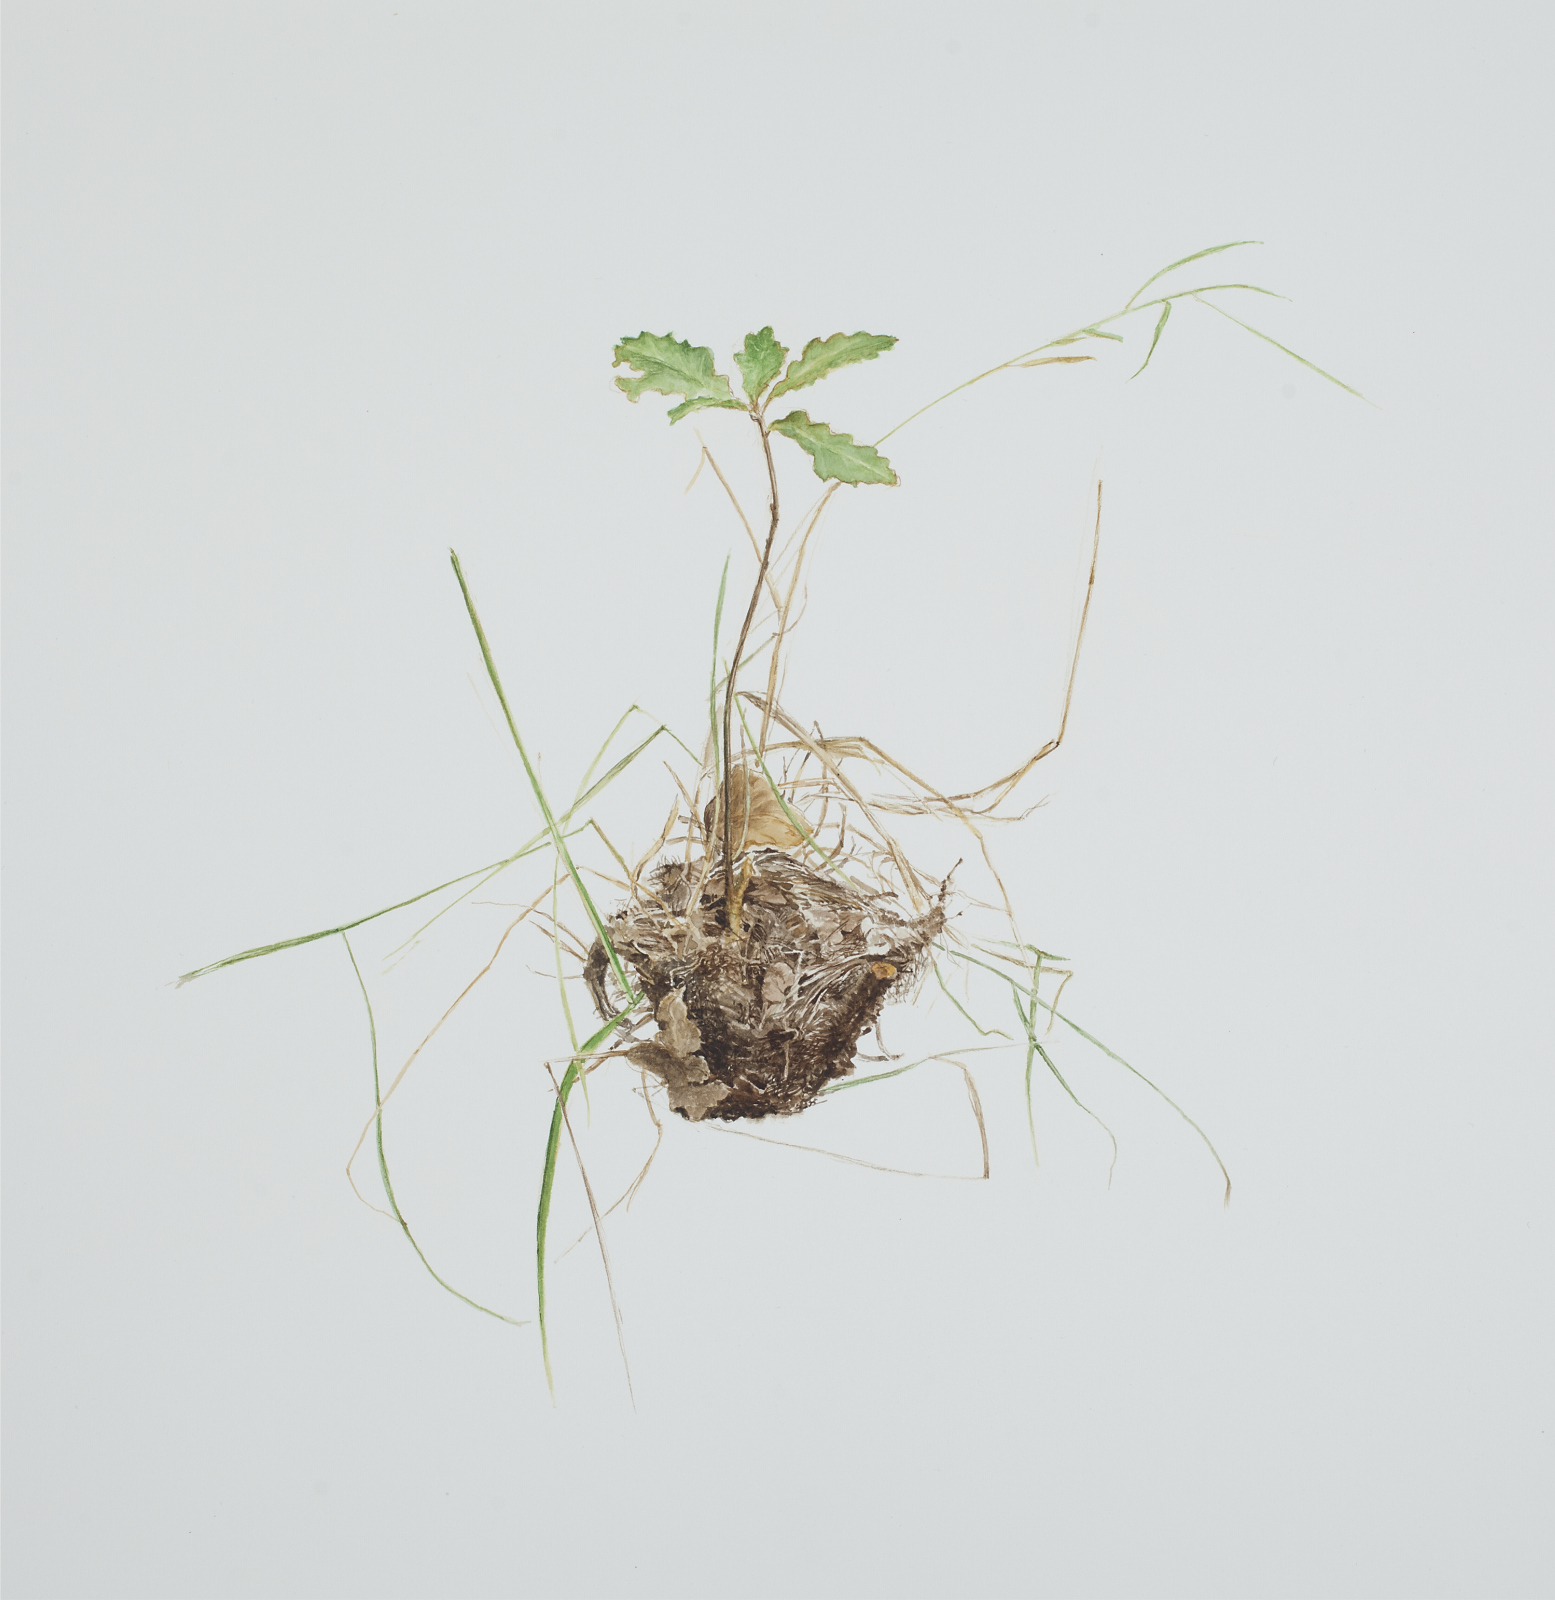 Thorbjørn Sørensen,"Oak and grass on soil ", 2013, water color on paper,  25 x 22 cm 